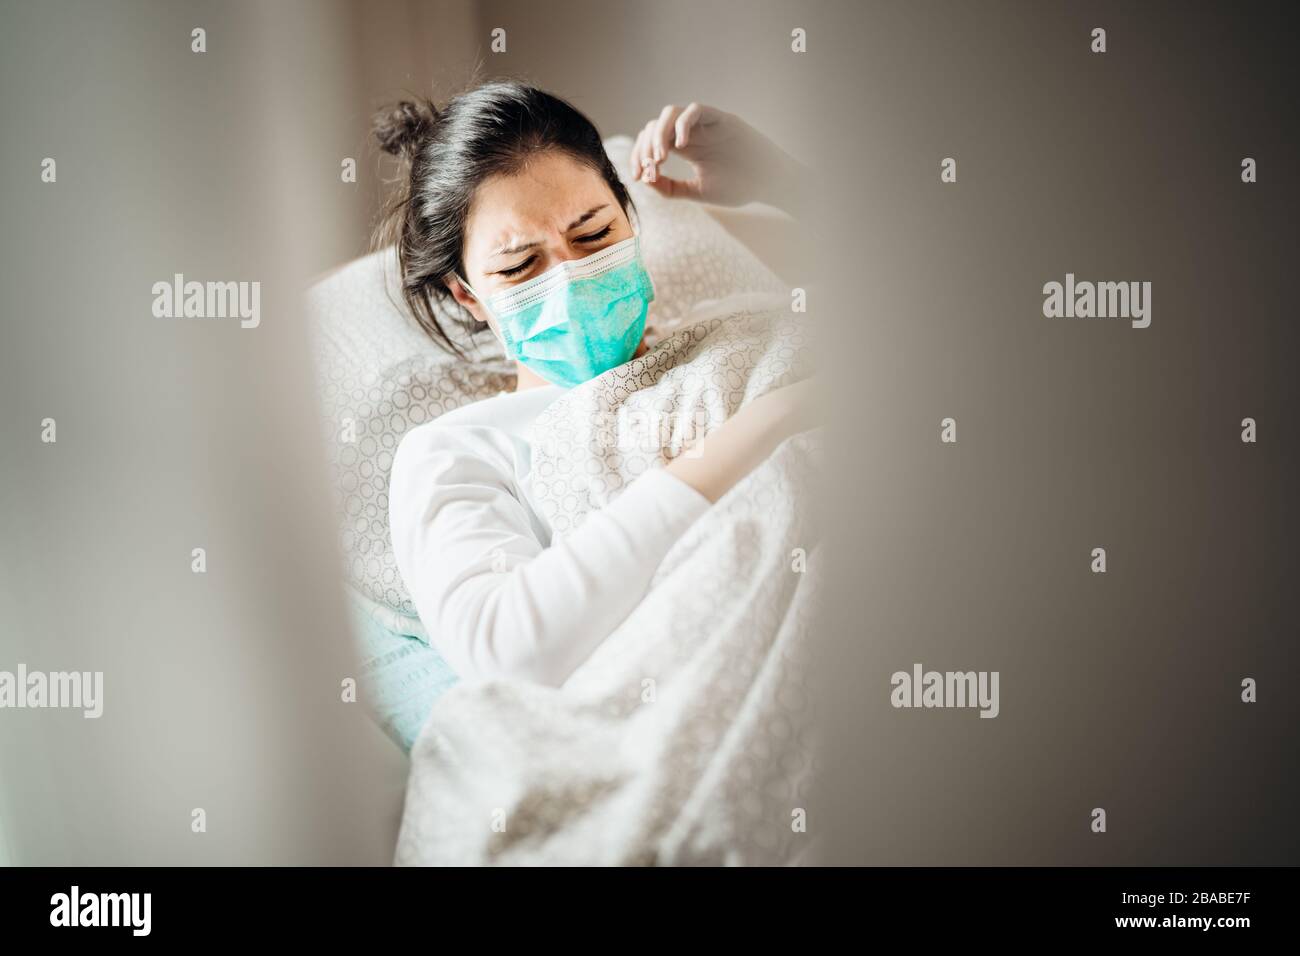 Sick woman with mask in mobile quarantine hospital units isolation.Coronavirus Covid-19 patient having pneumonia disease symptoms.Cough Stock Photo